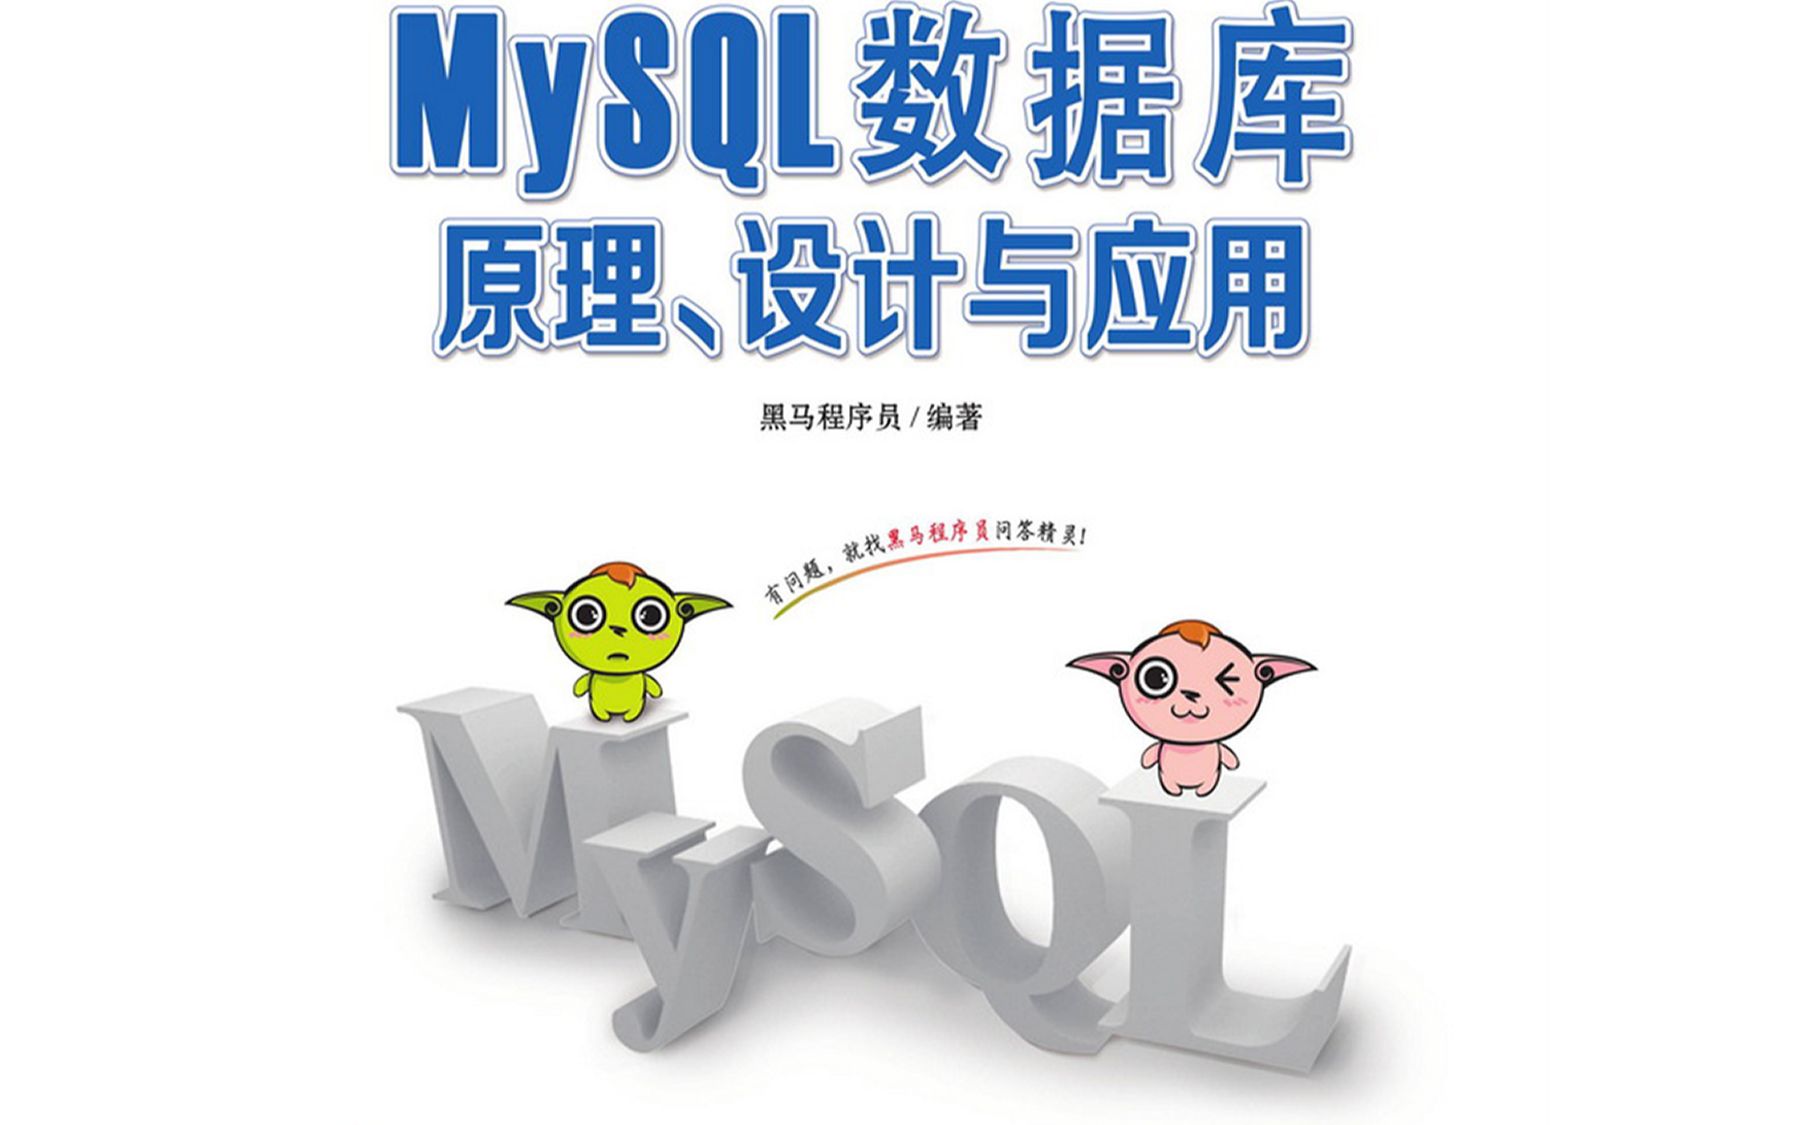 MySQL数据库原理、设计与应用